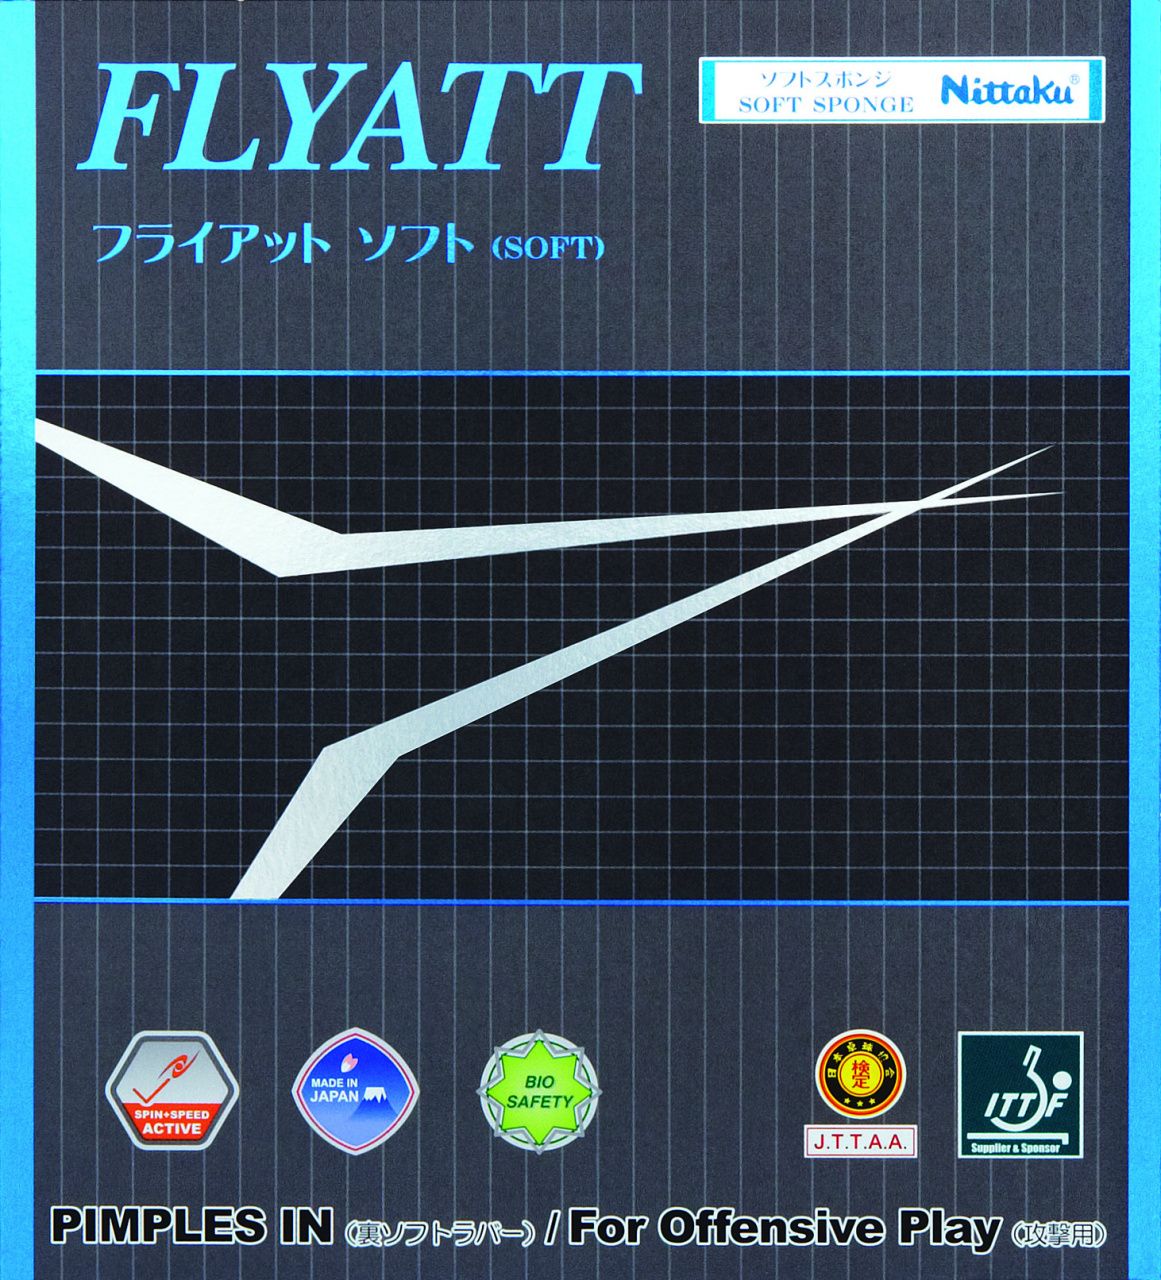 Накладка NITTAKU Flyatt Soft